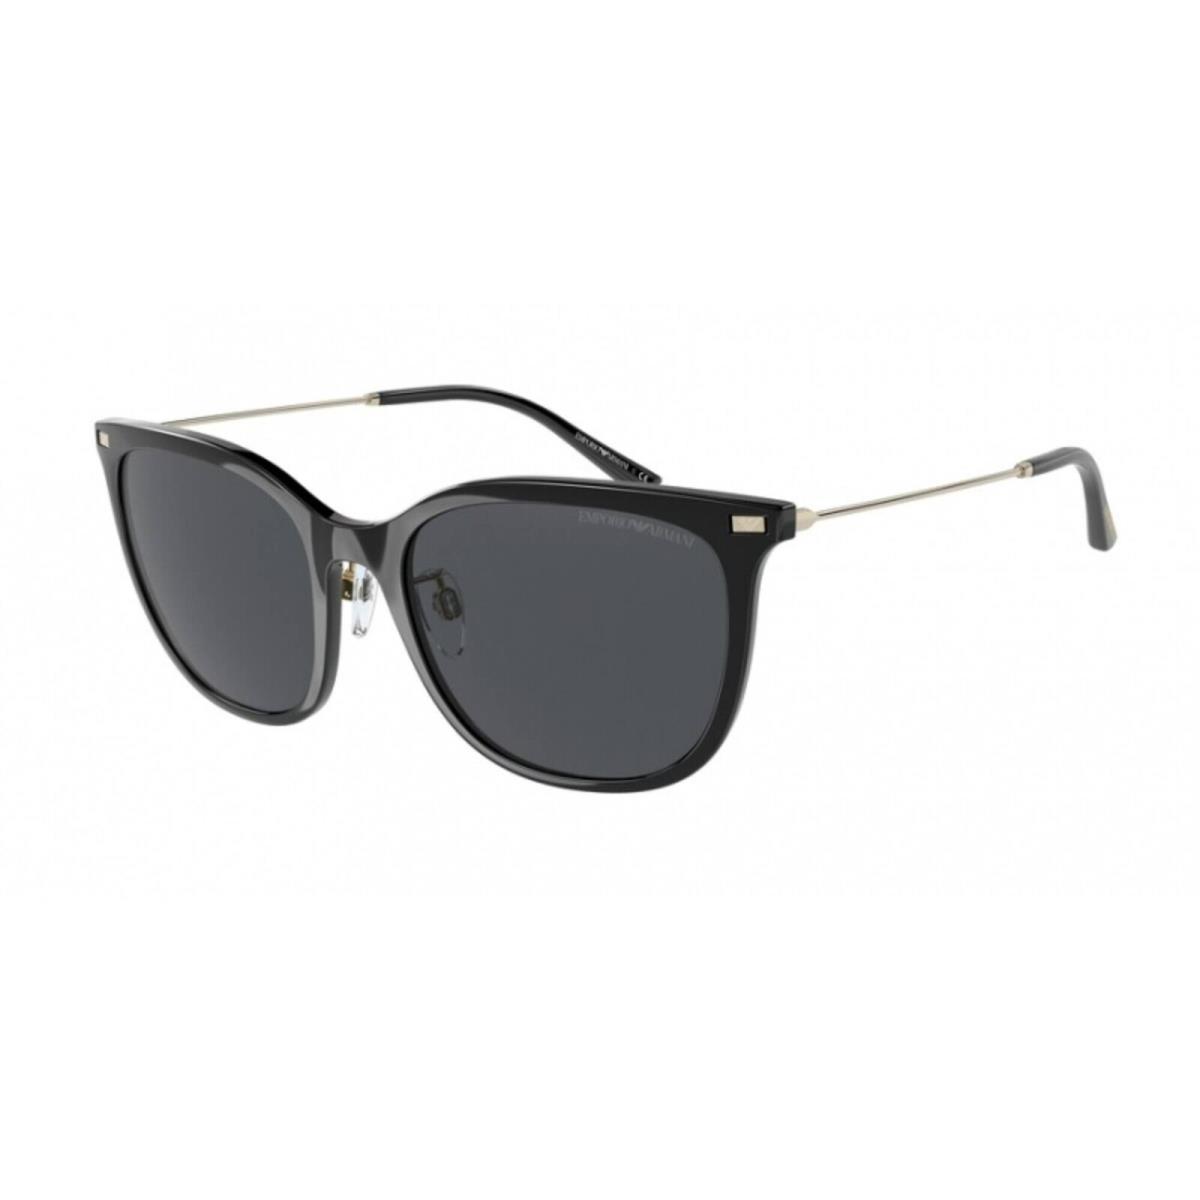 Emporio Armani Women`s Sunglasses Shiny Black Plastic Cat Eye Frame 4181 500187